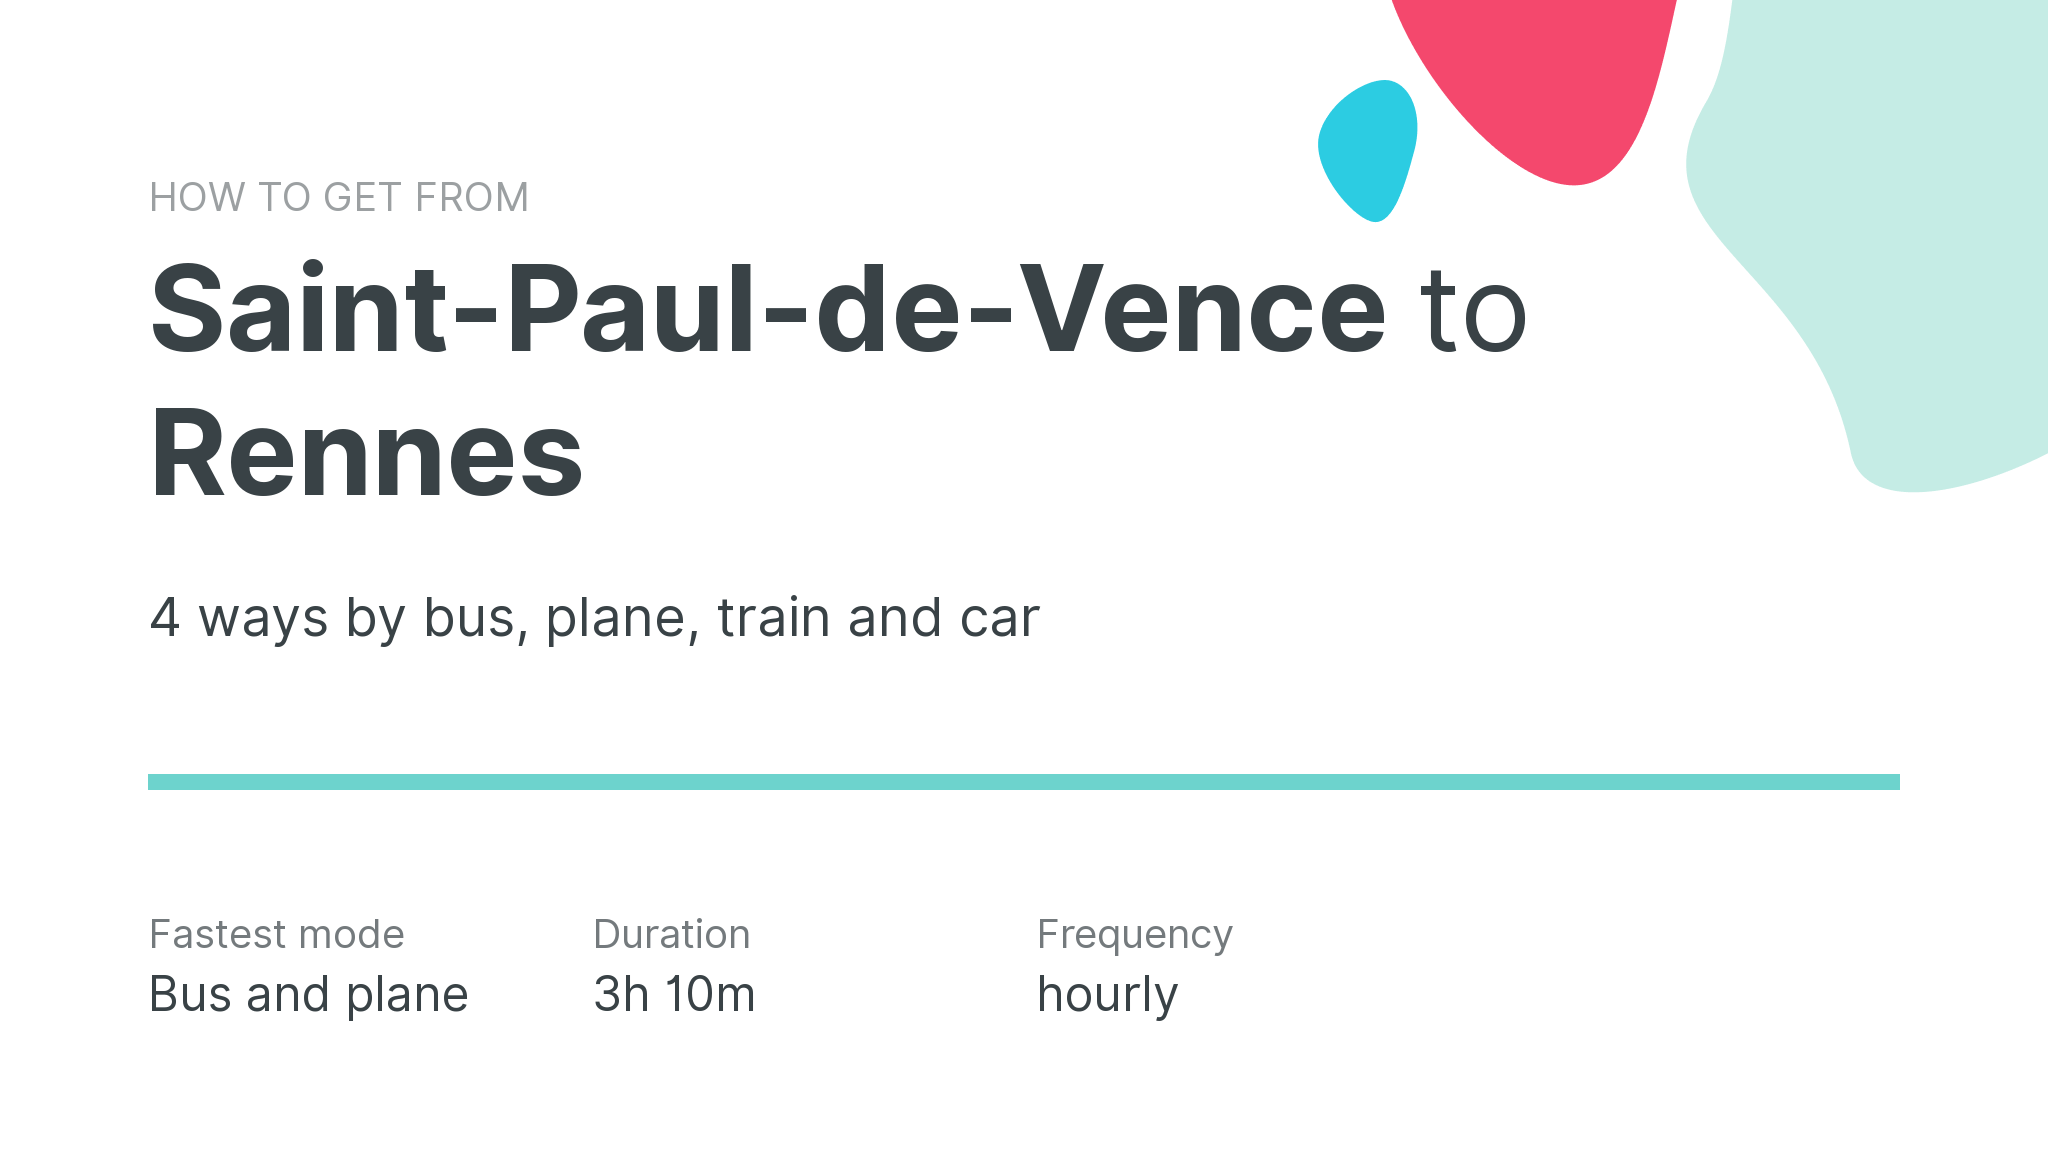 How do I get from Saint-Paul-de-Vence to Rennes